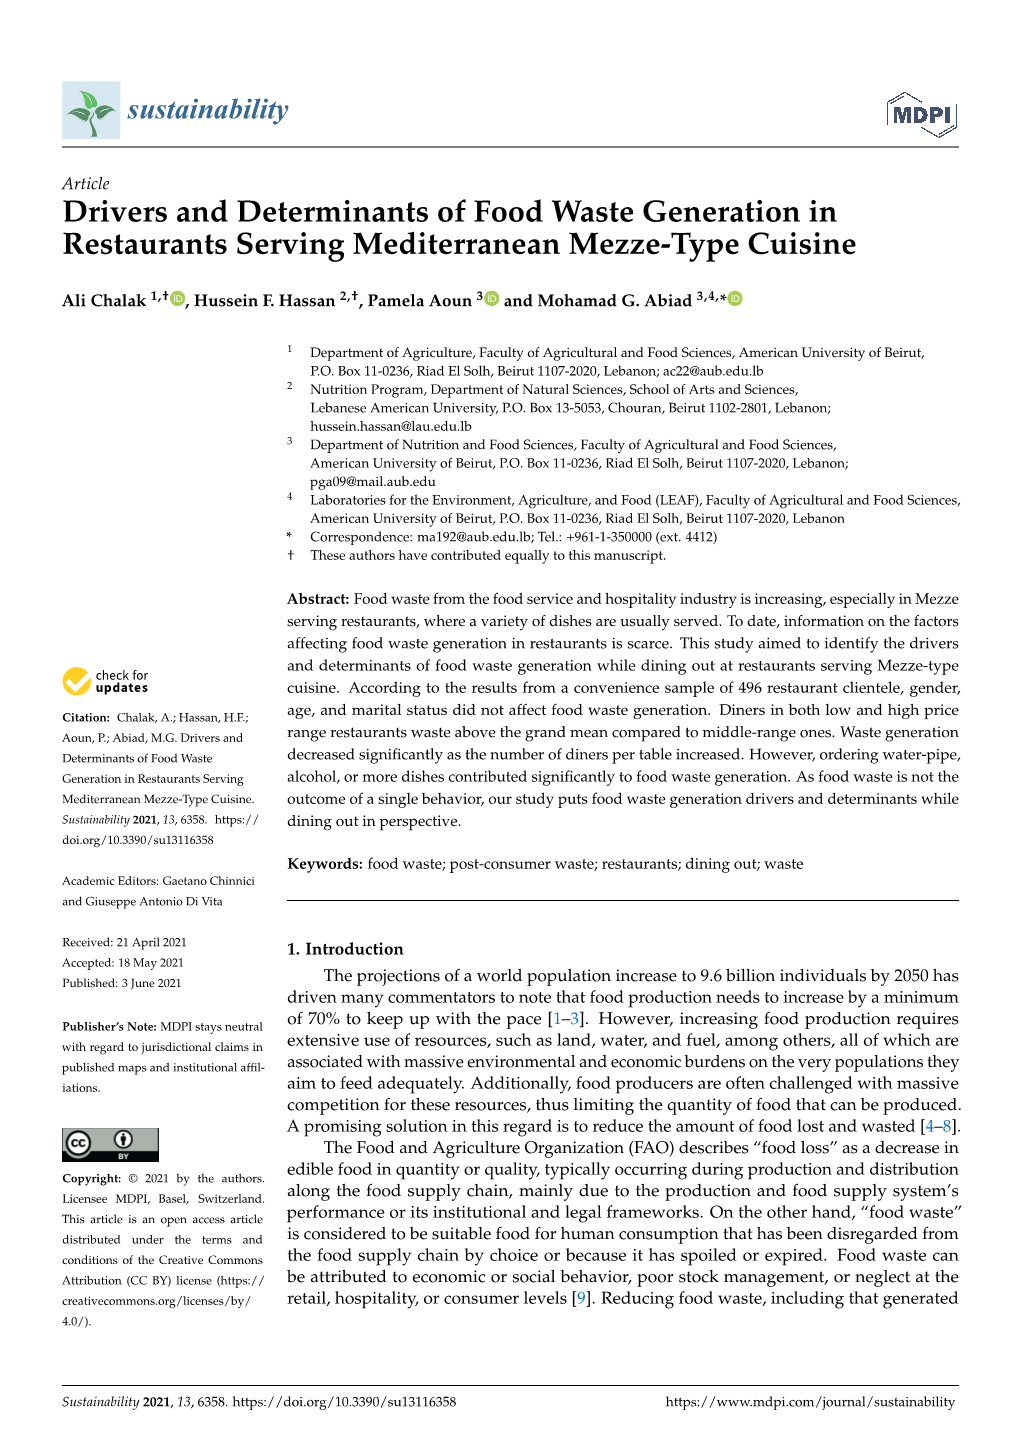 Drivers and Determinants of Food Waste Generation in Restaurants Serving Mediterranean Mezze-Type Cuisine